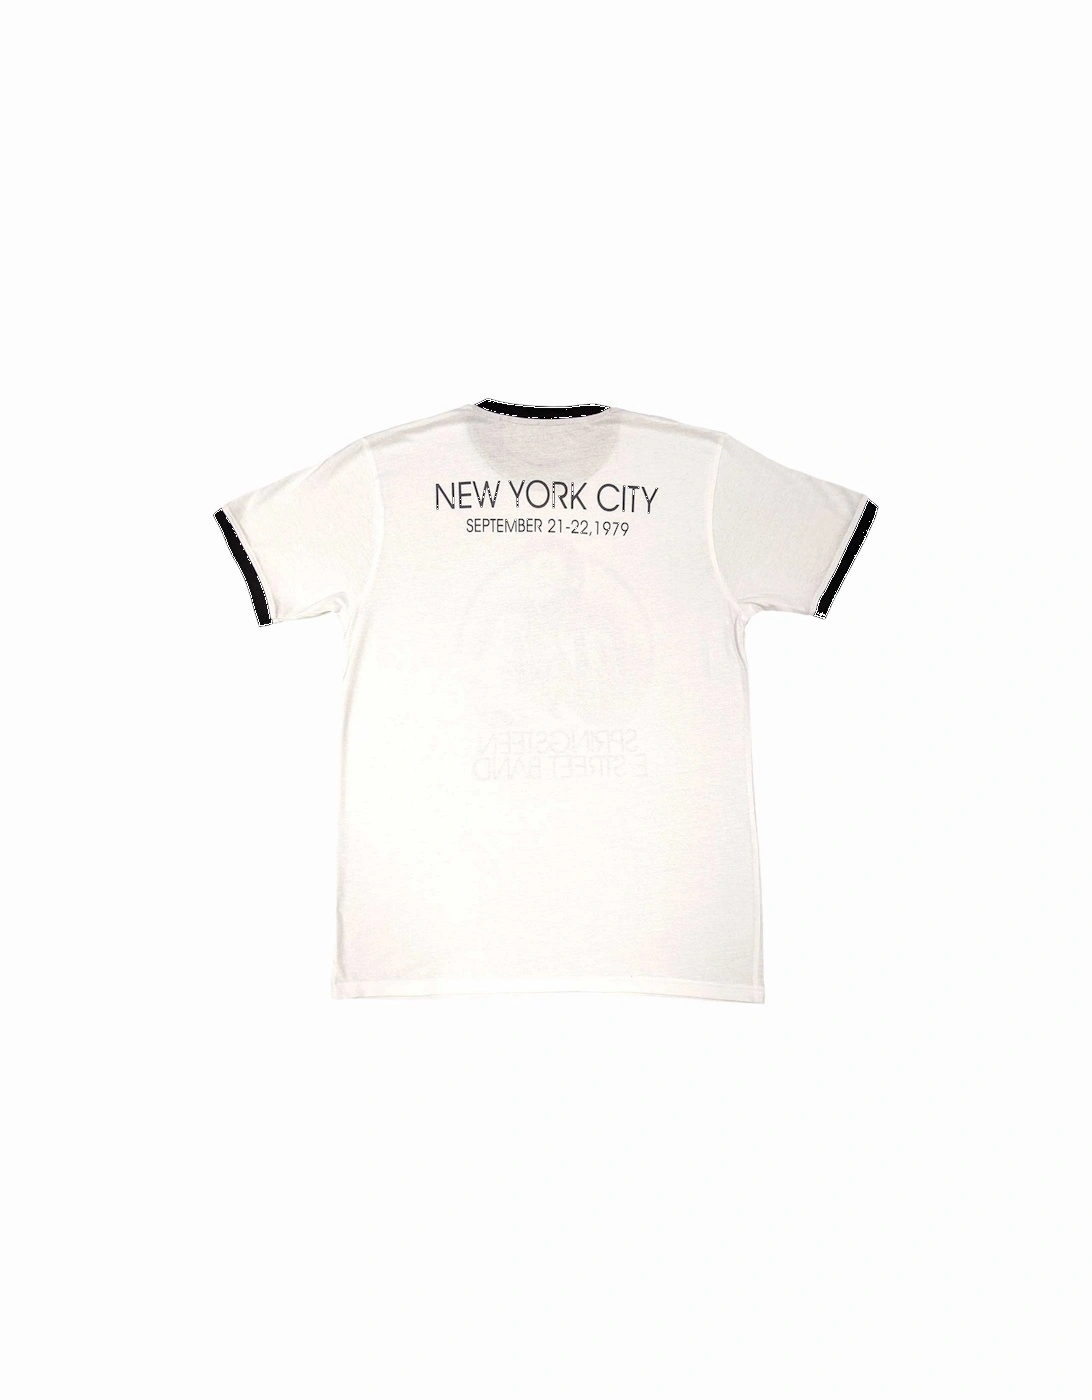 Unisex Adult New York T-Shirt